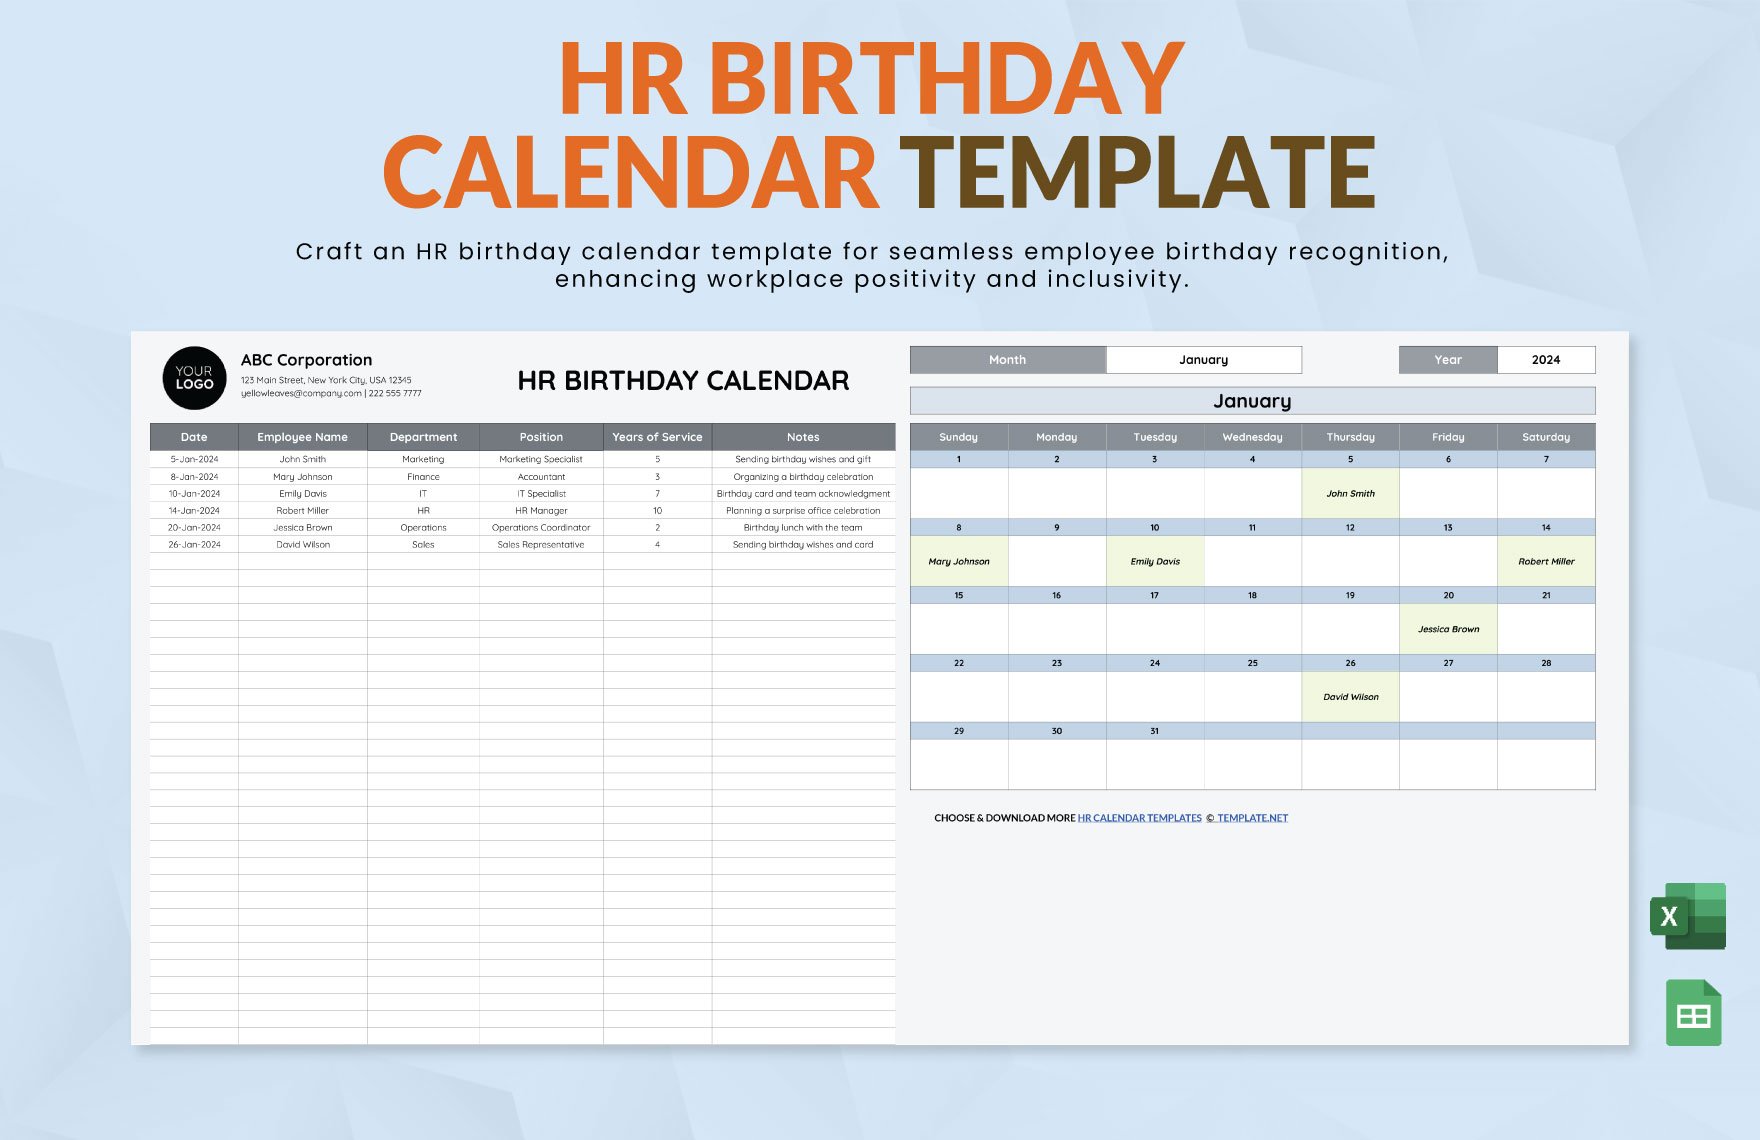 HR Birthday Calendar Template